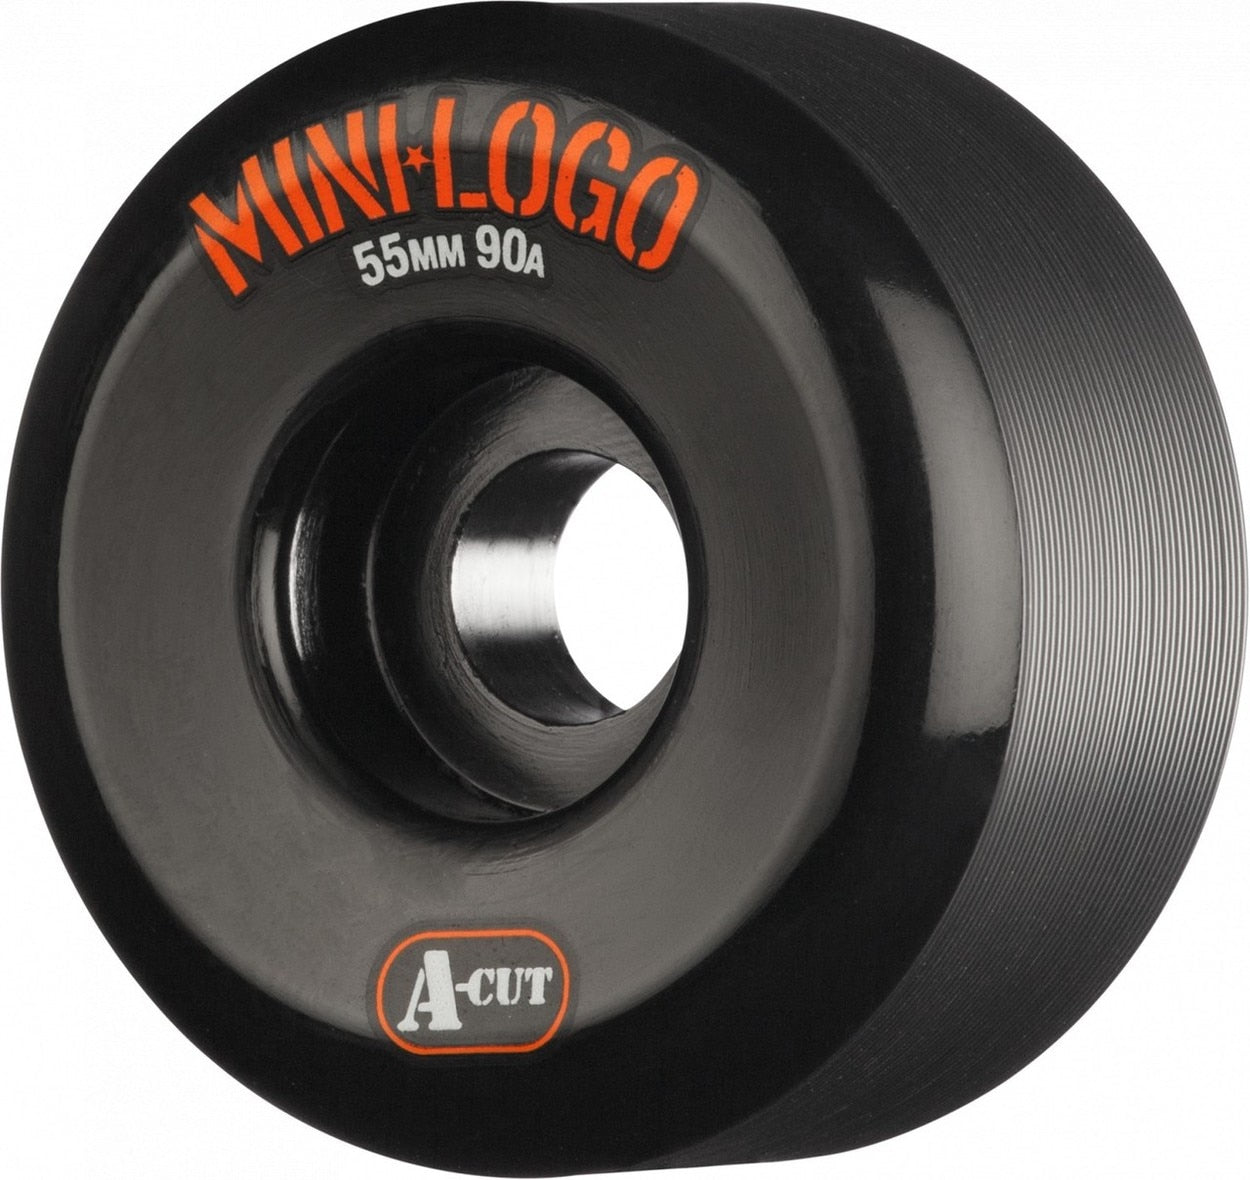 Mini Logo A-Cut 90a Skateboard Wheels - Black